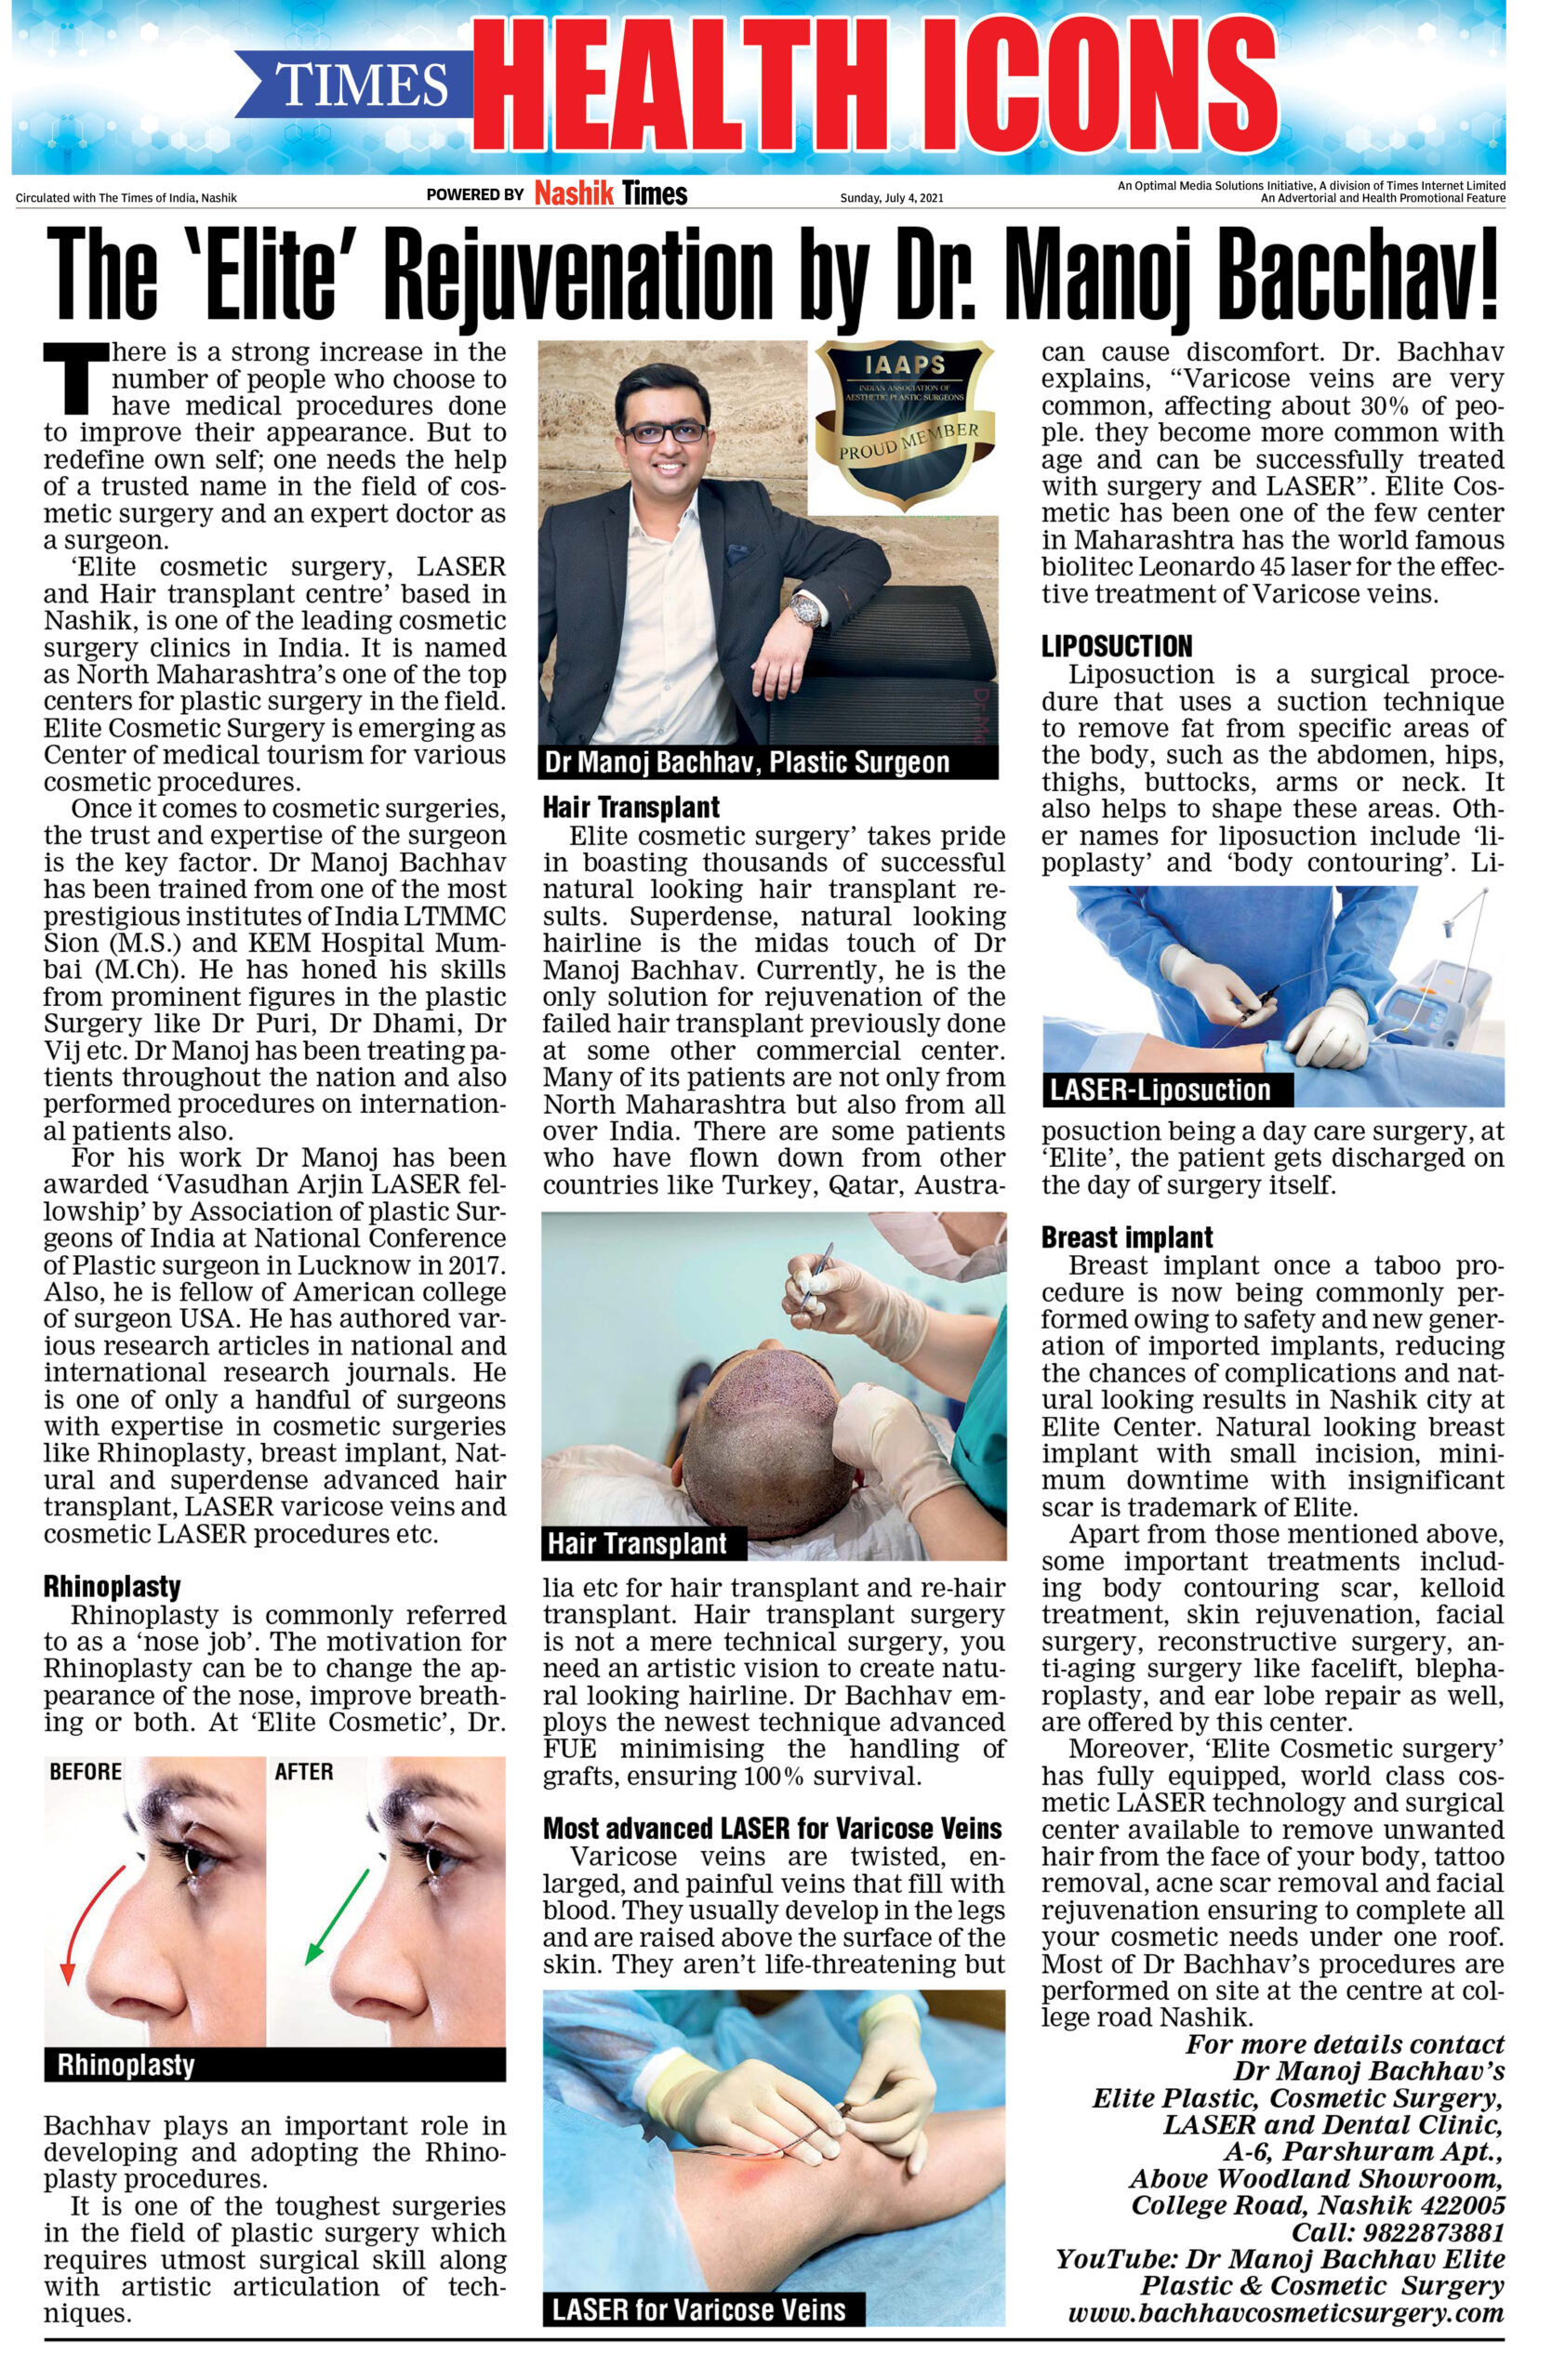 Hair Loss Treatment Services in Nashik हयर लस टरटमट सरवसज नसक